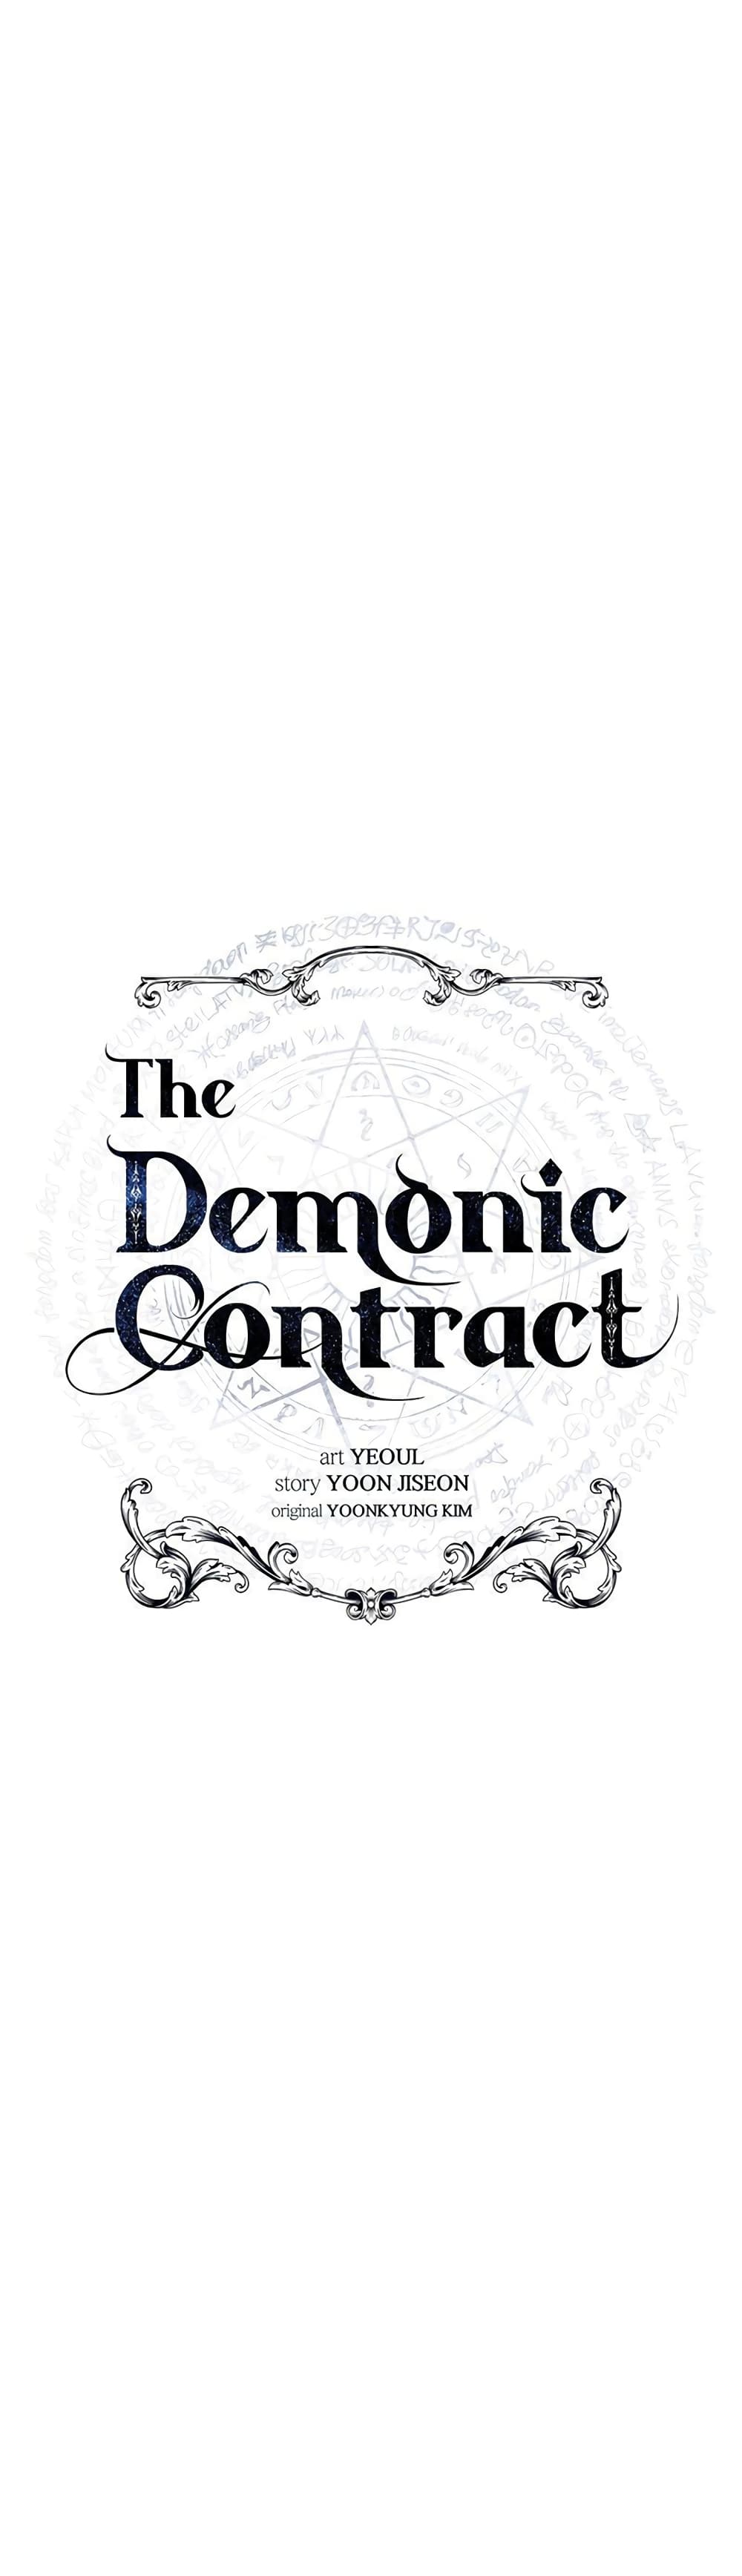 The Demonic Contract 40 (3)